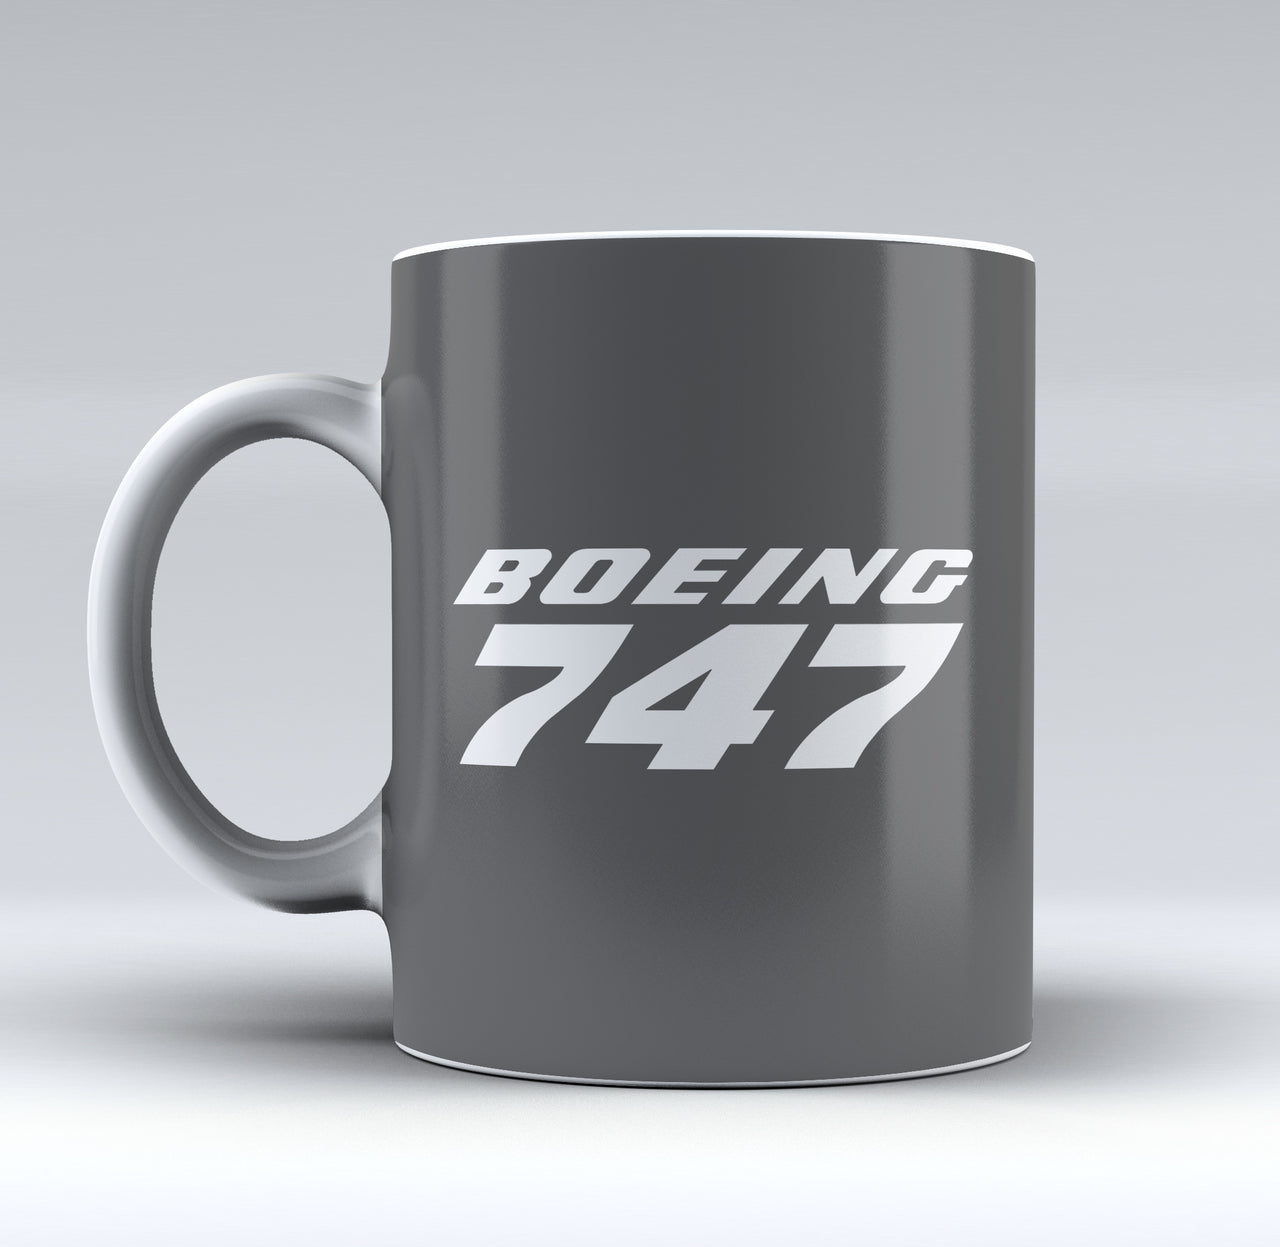 Boeing 747 & Text Designed Mugs